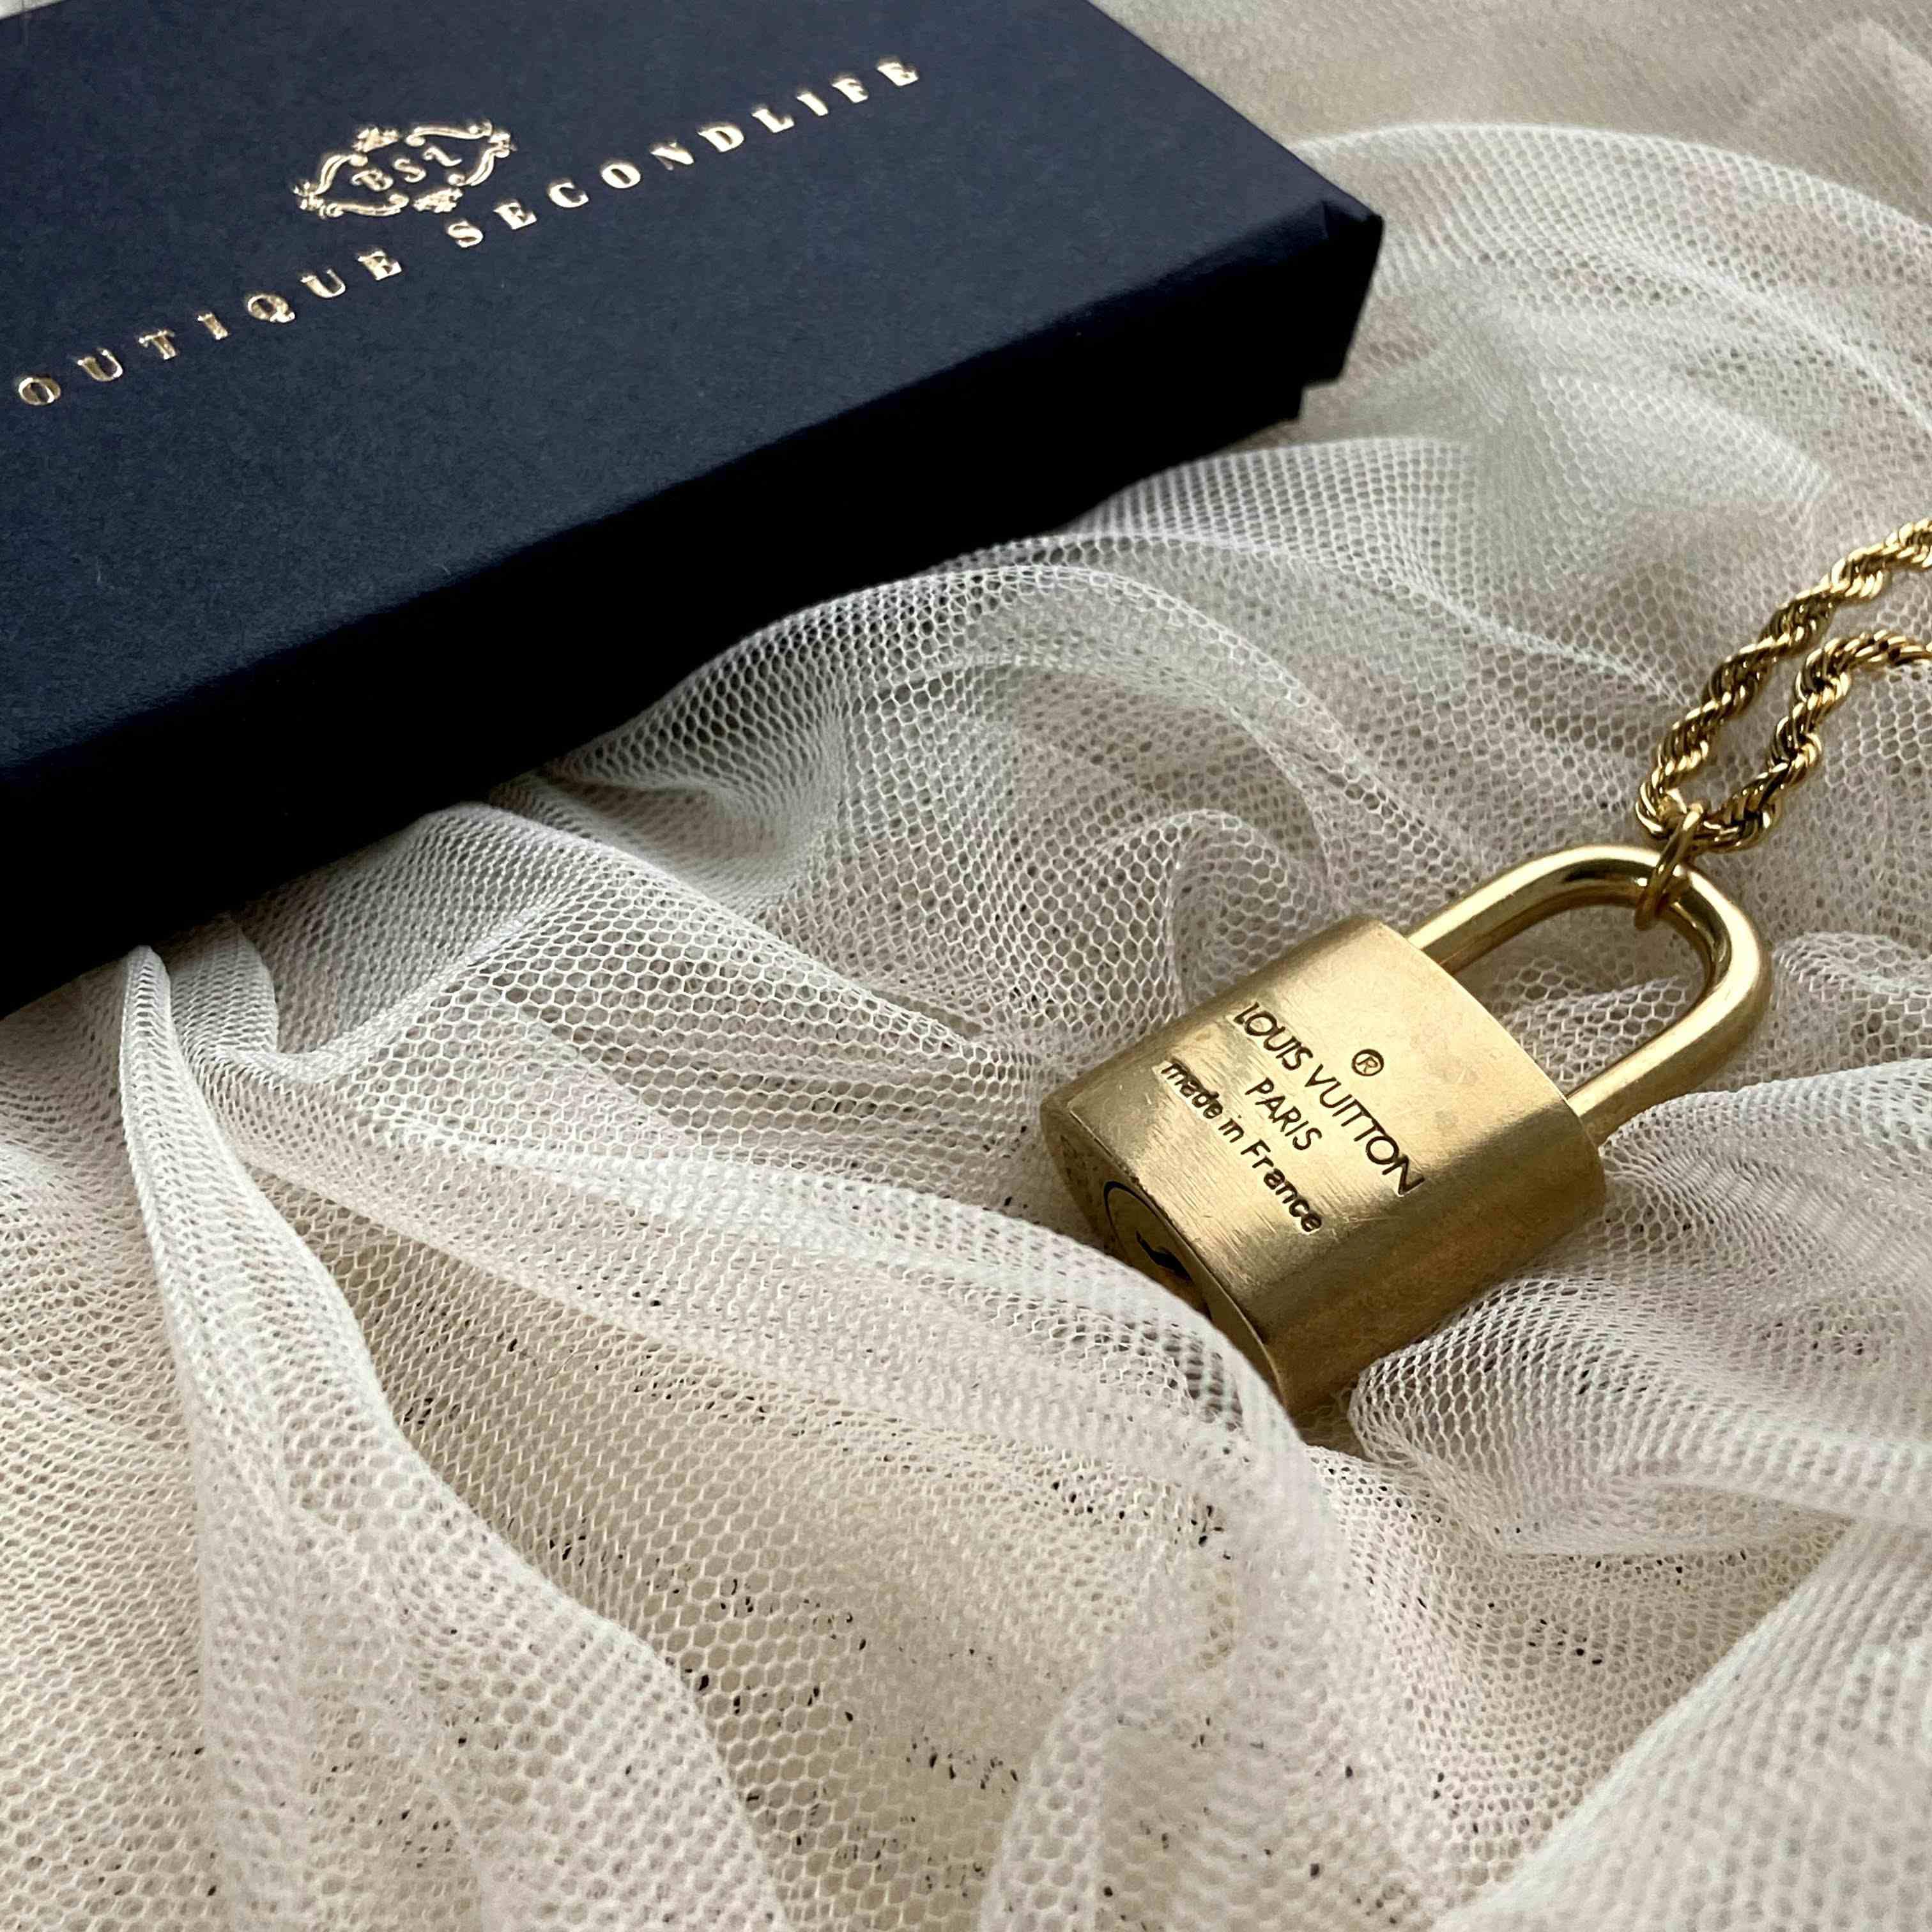 Louis Vuitton Gold Padlock Necklace - Rope Chain An - Depop